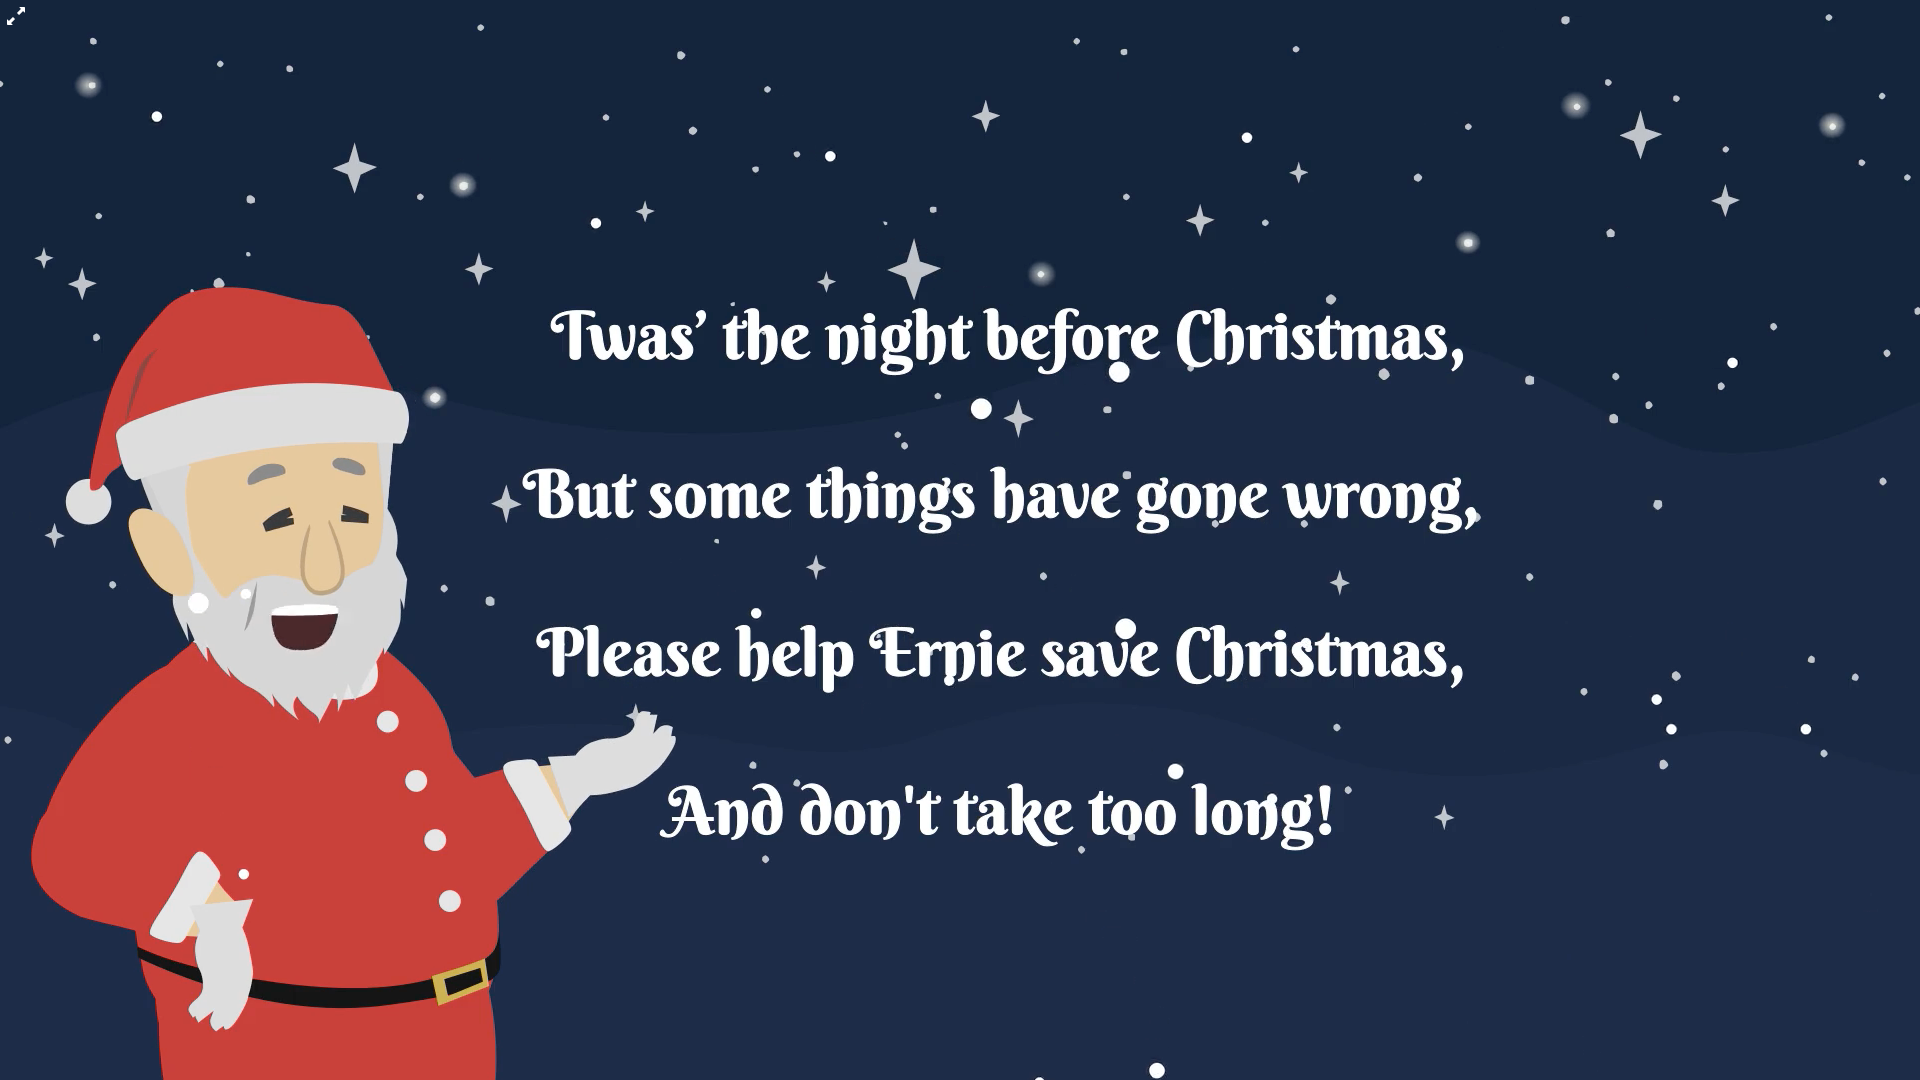 Santa needs your help!